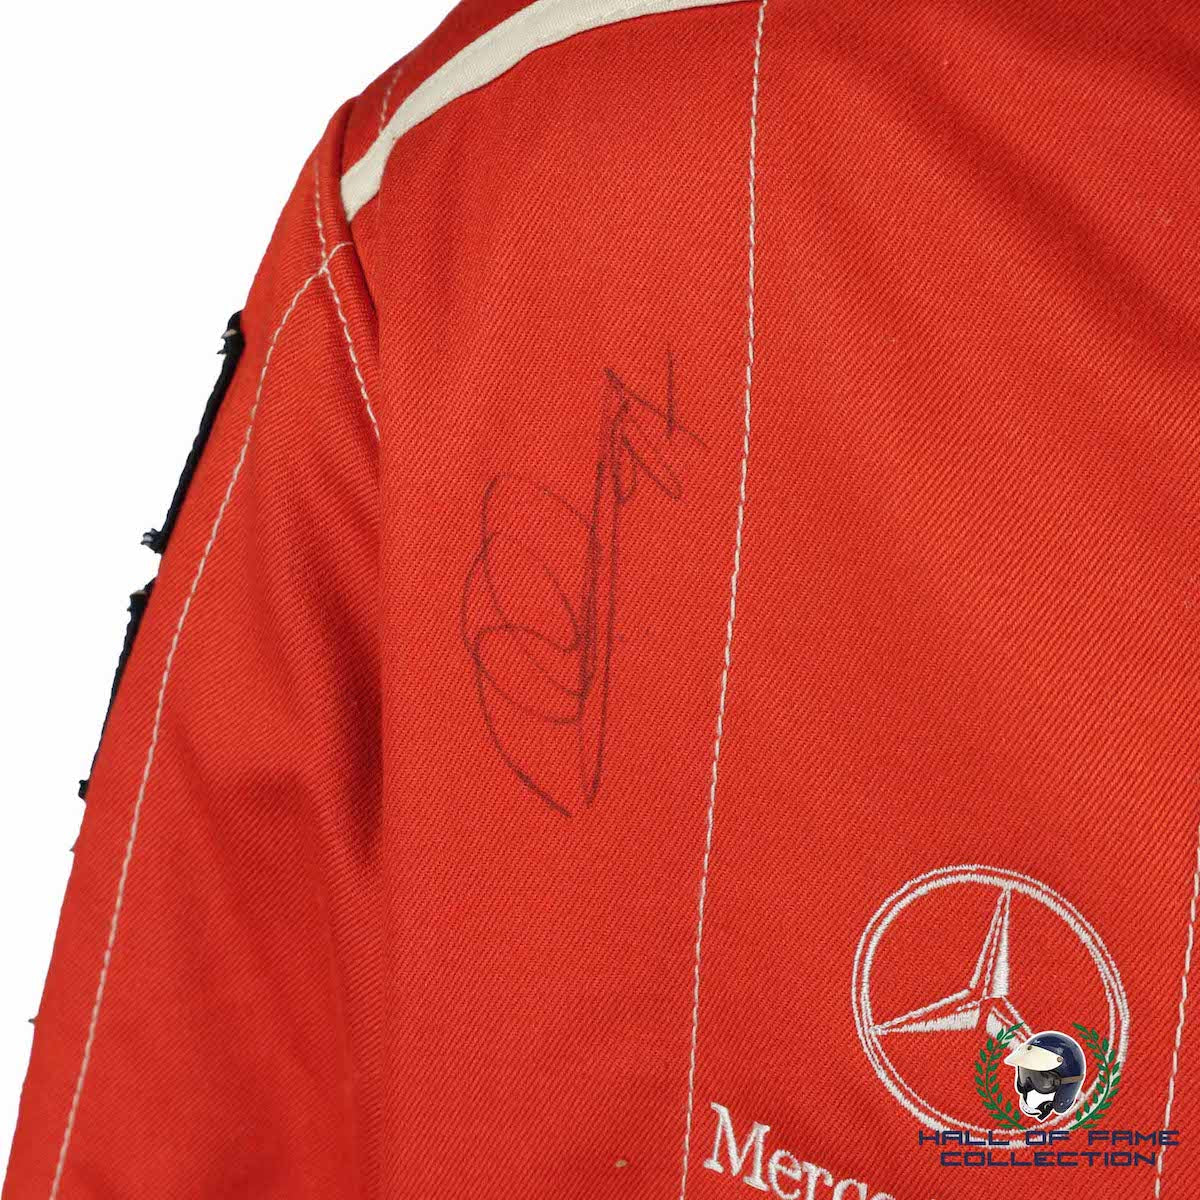 1995 Mika Hakkinen / David Coulthard Signed Mechanics Used McLaren F1 Suit